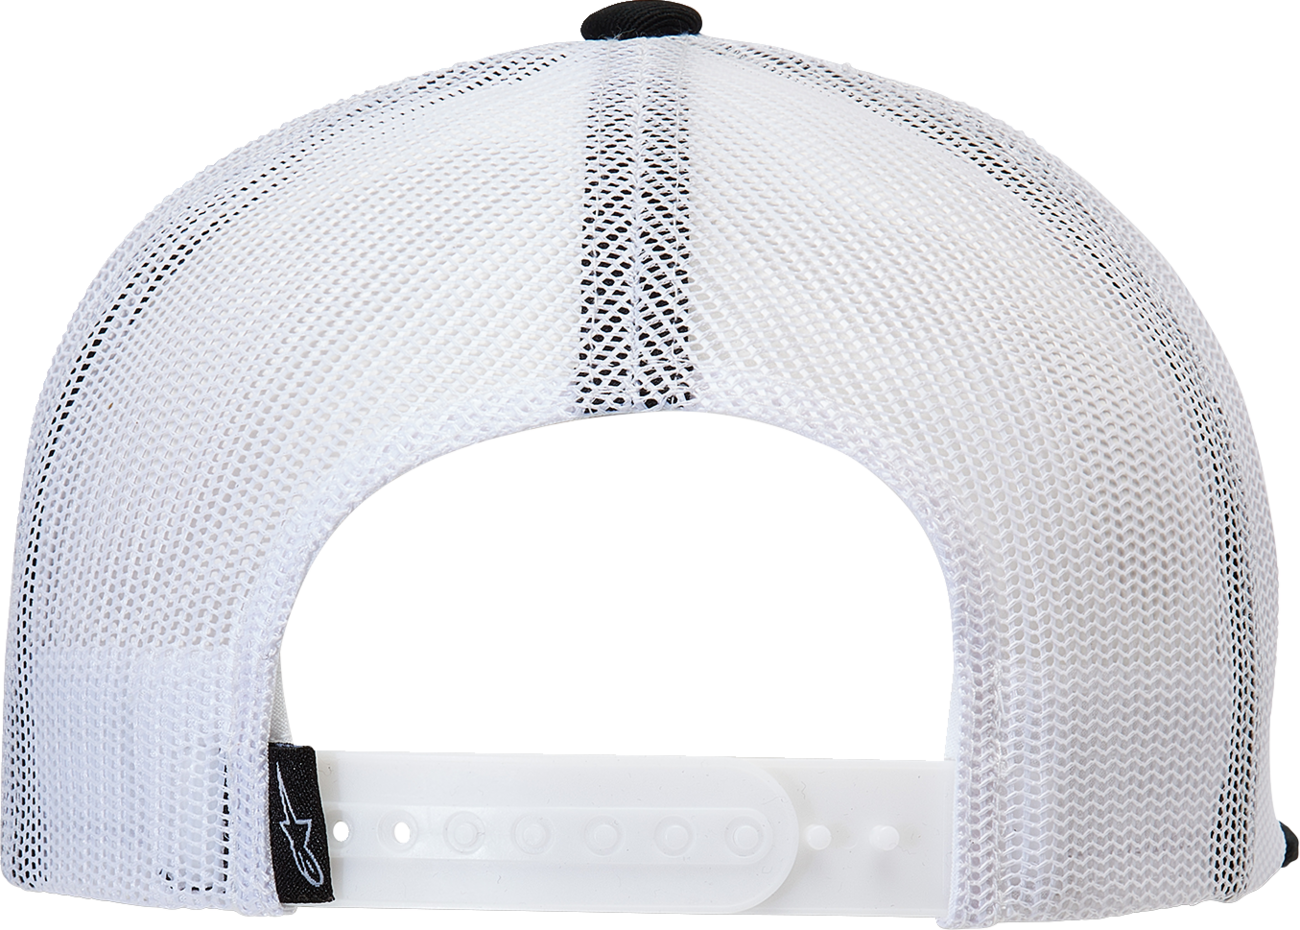 ALPINESTARS Bolt Trucker Hat - Black/White - One Size 1213810141020OS